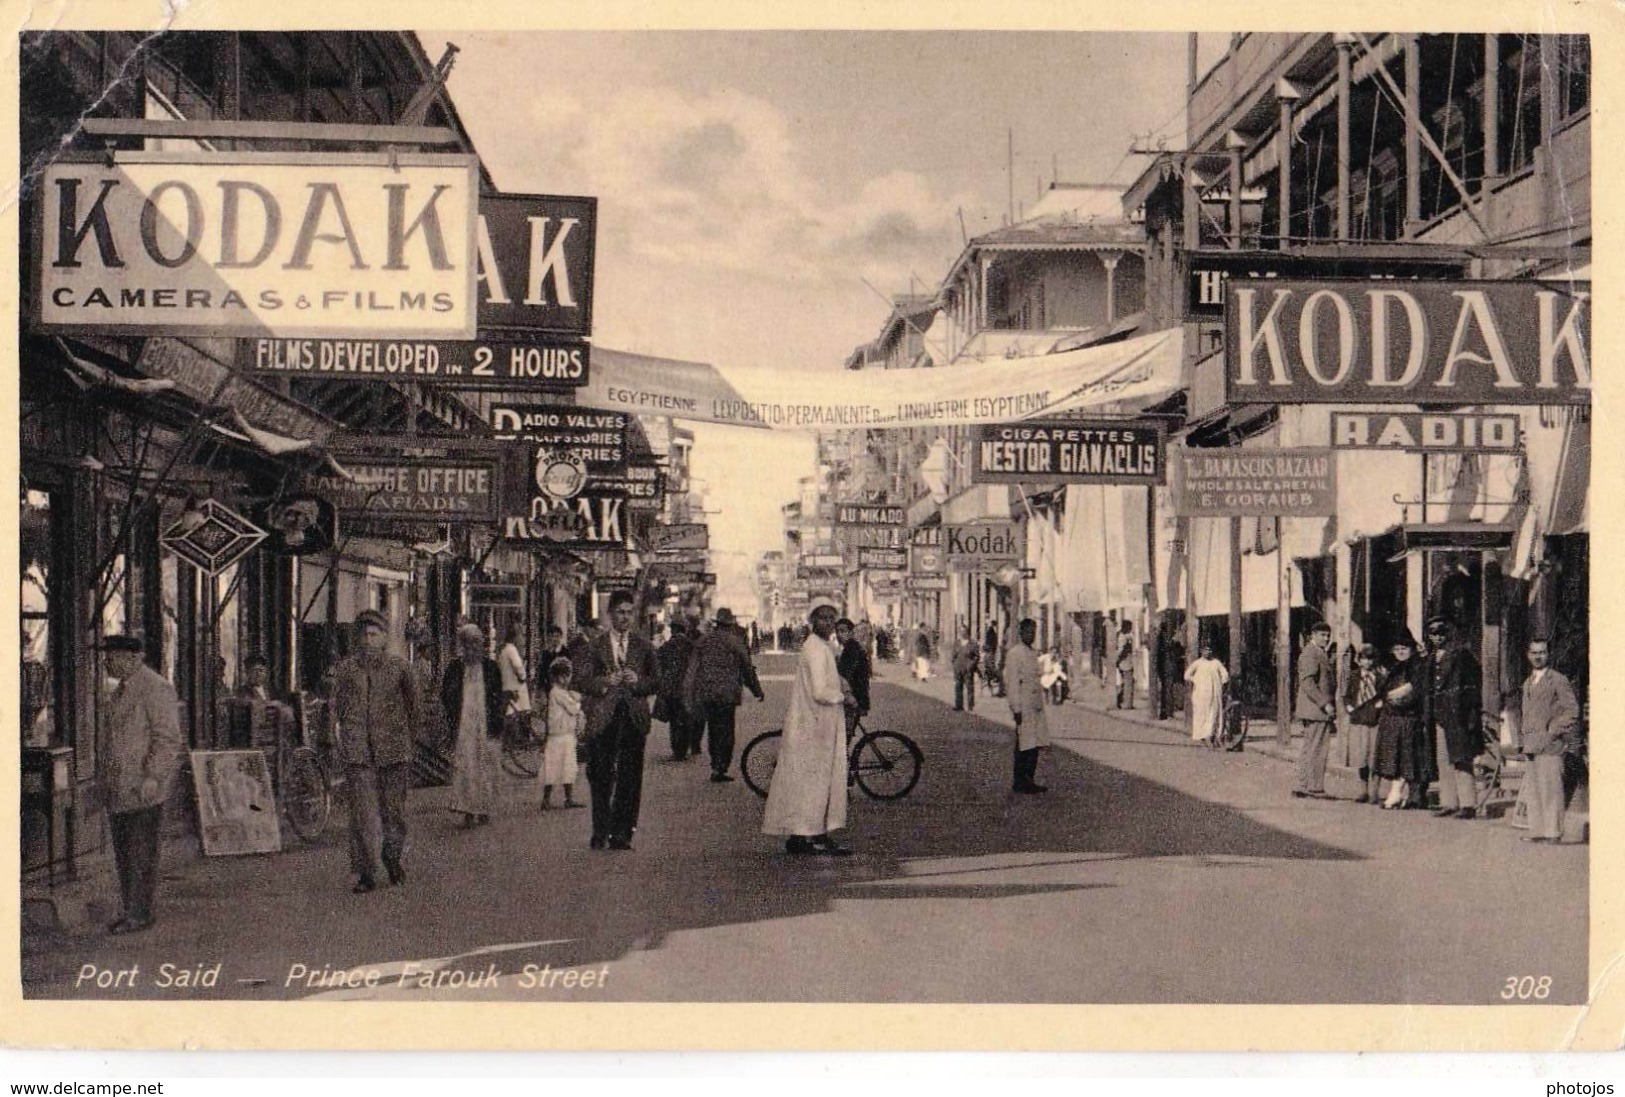 Postcard :Port Saïd (Egypte) Prince Farouk Street   Oriental Bureau Pub Cameras & Films Kodak - Assioet